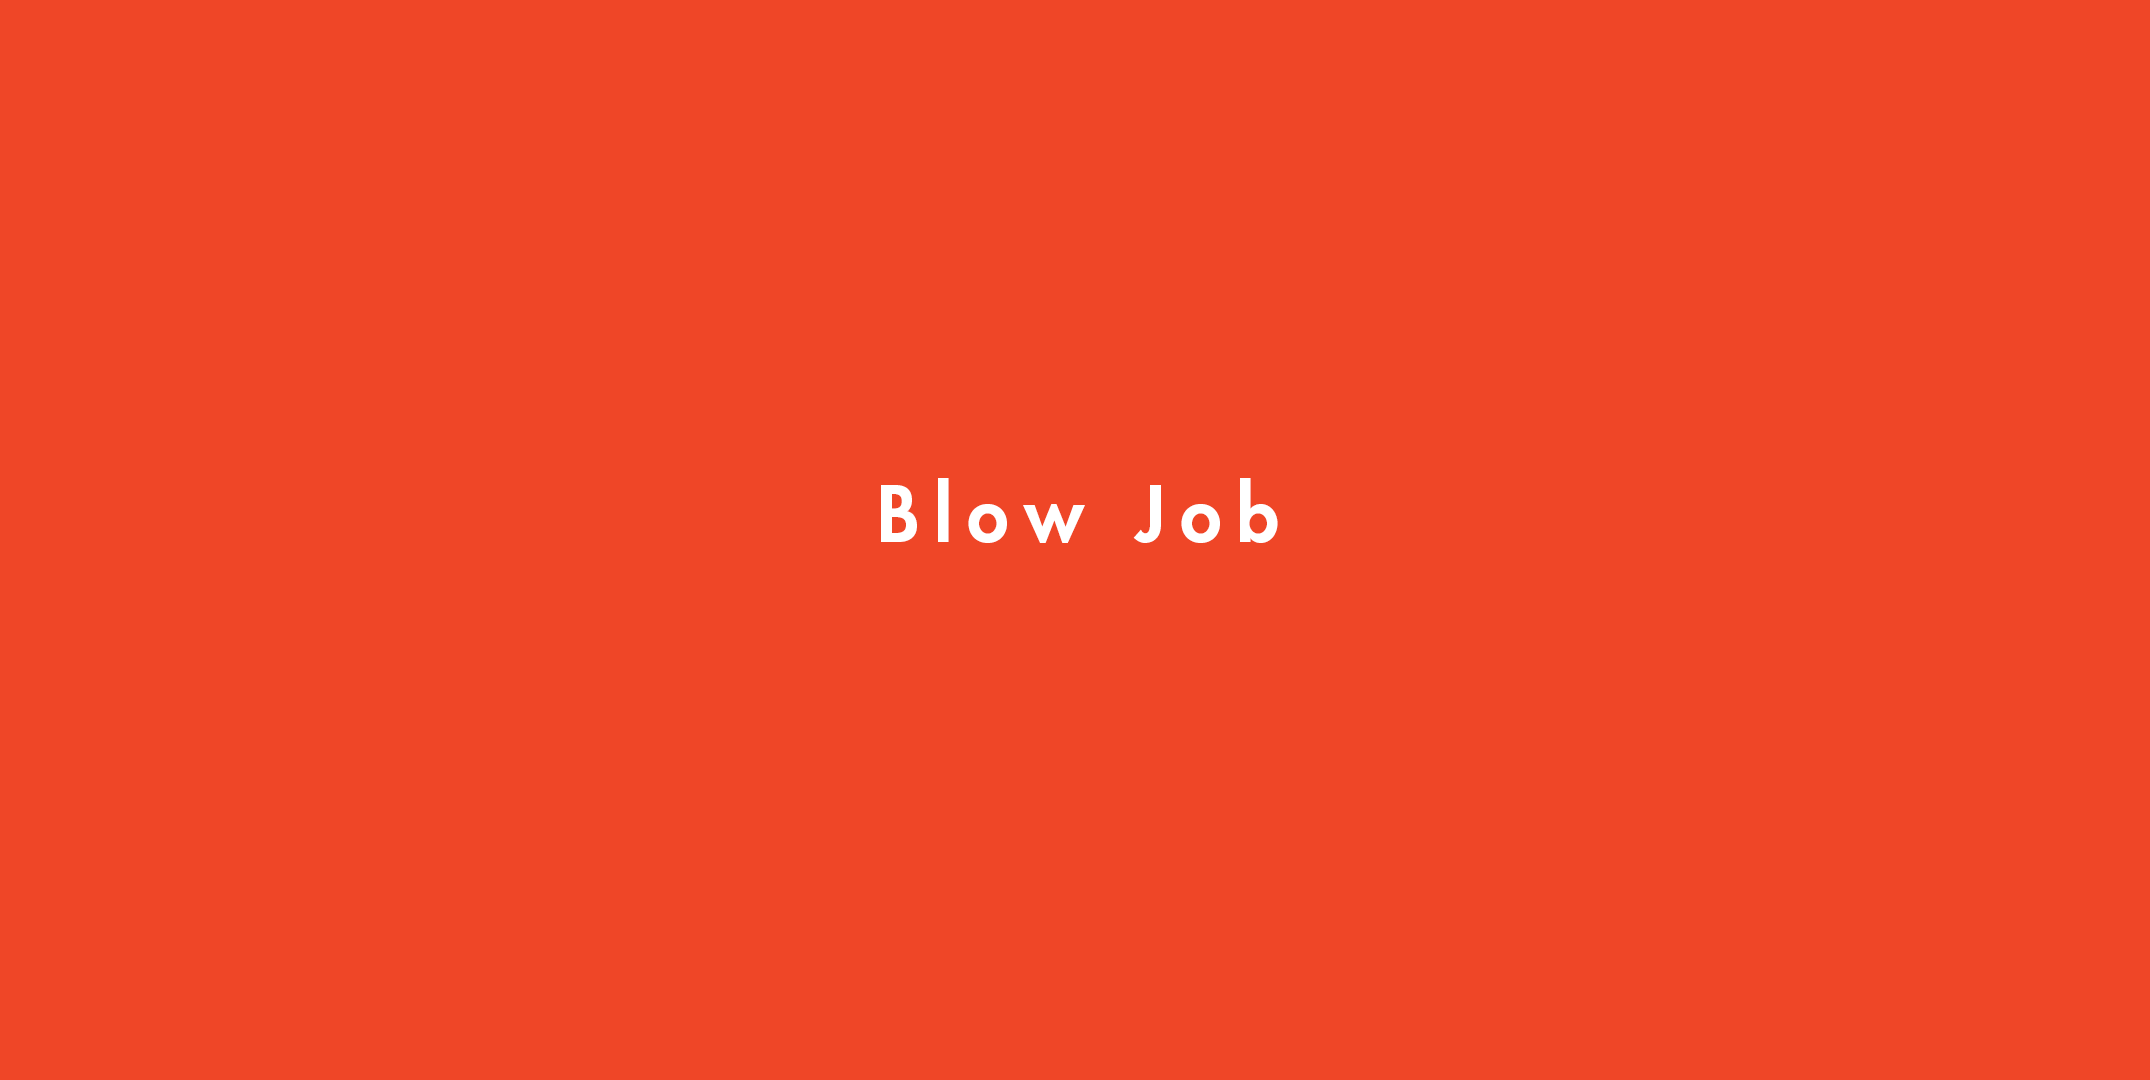 Blow Job Definition